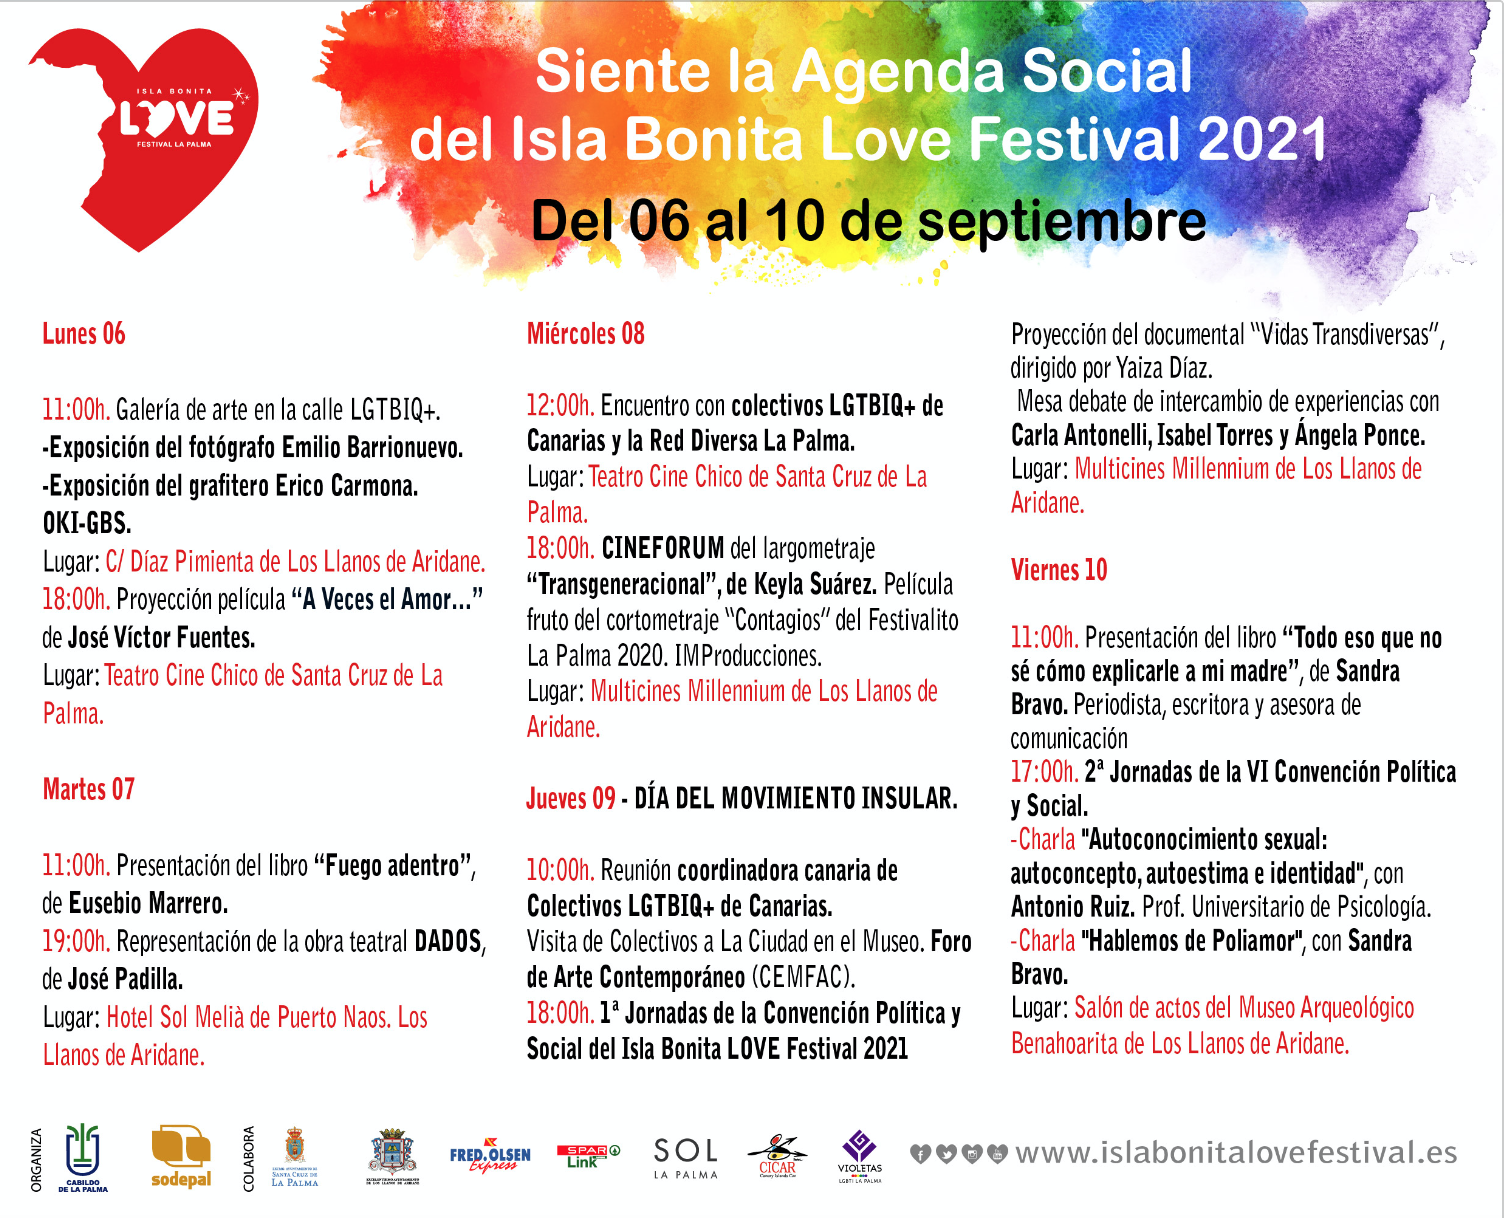 El Love Festival llena La Palma de amor a la diversidad (y de compromiso LGTBI)